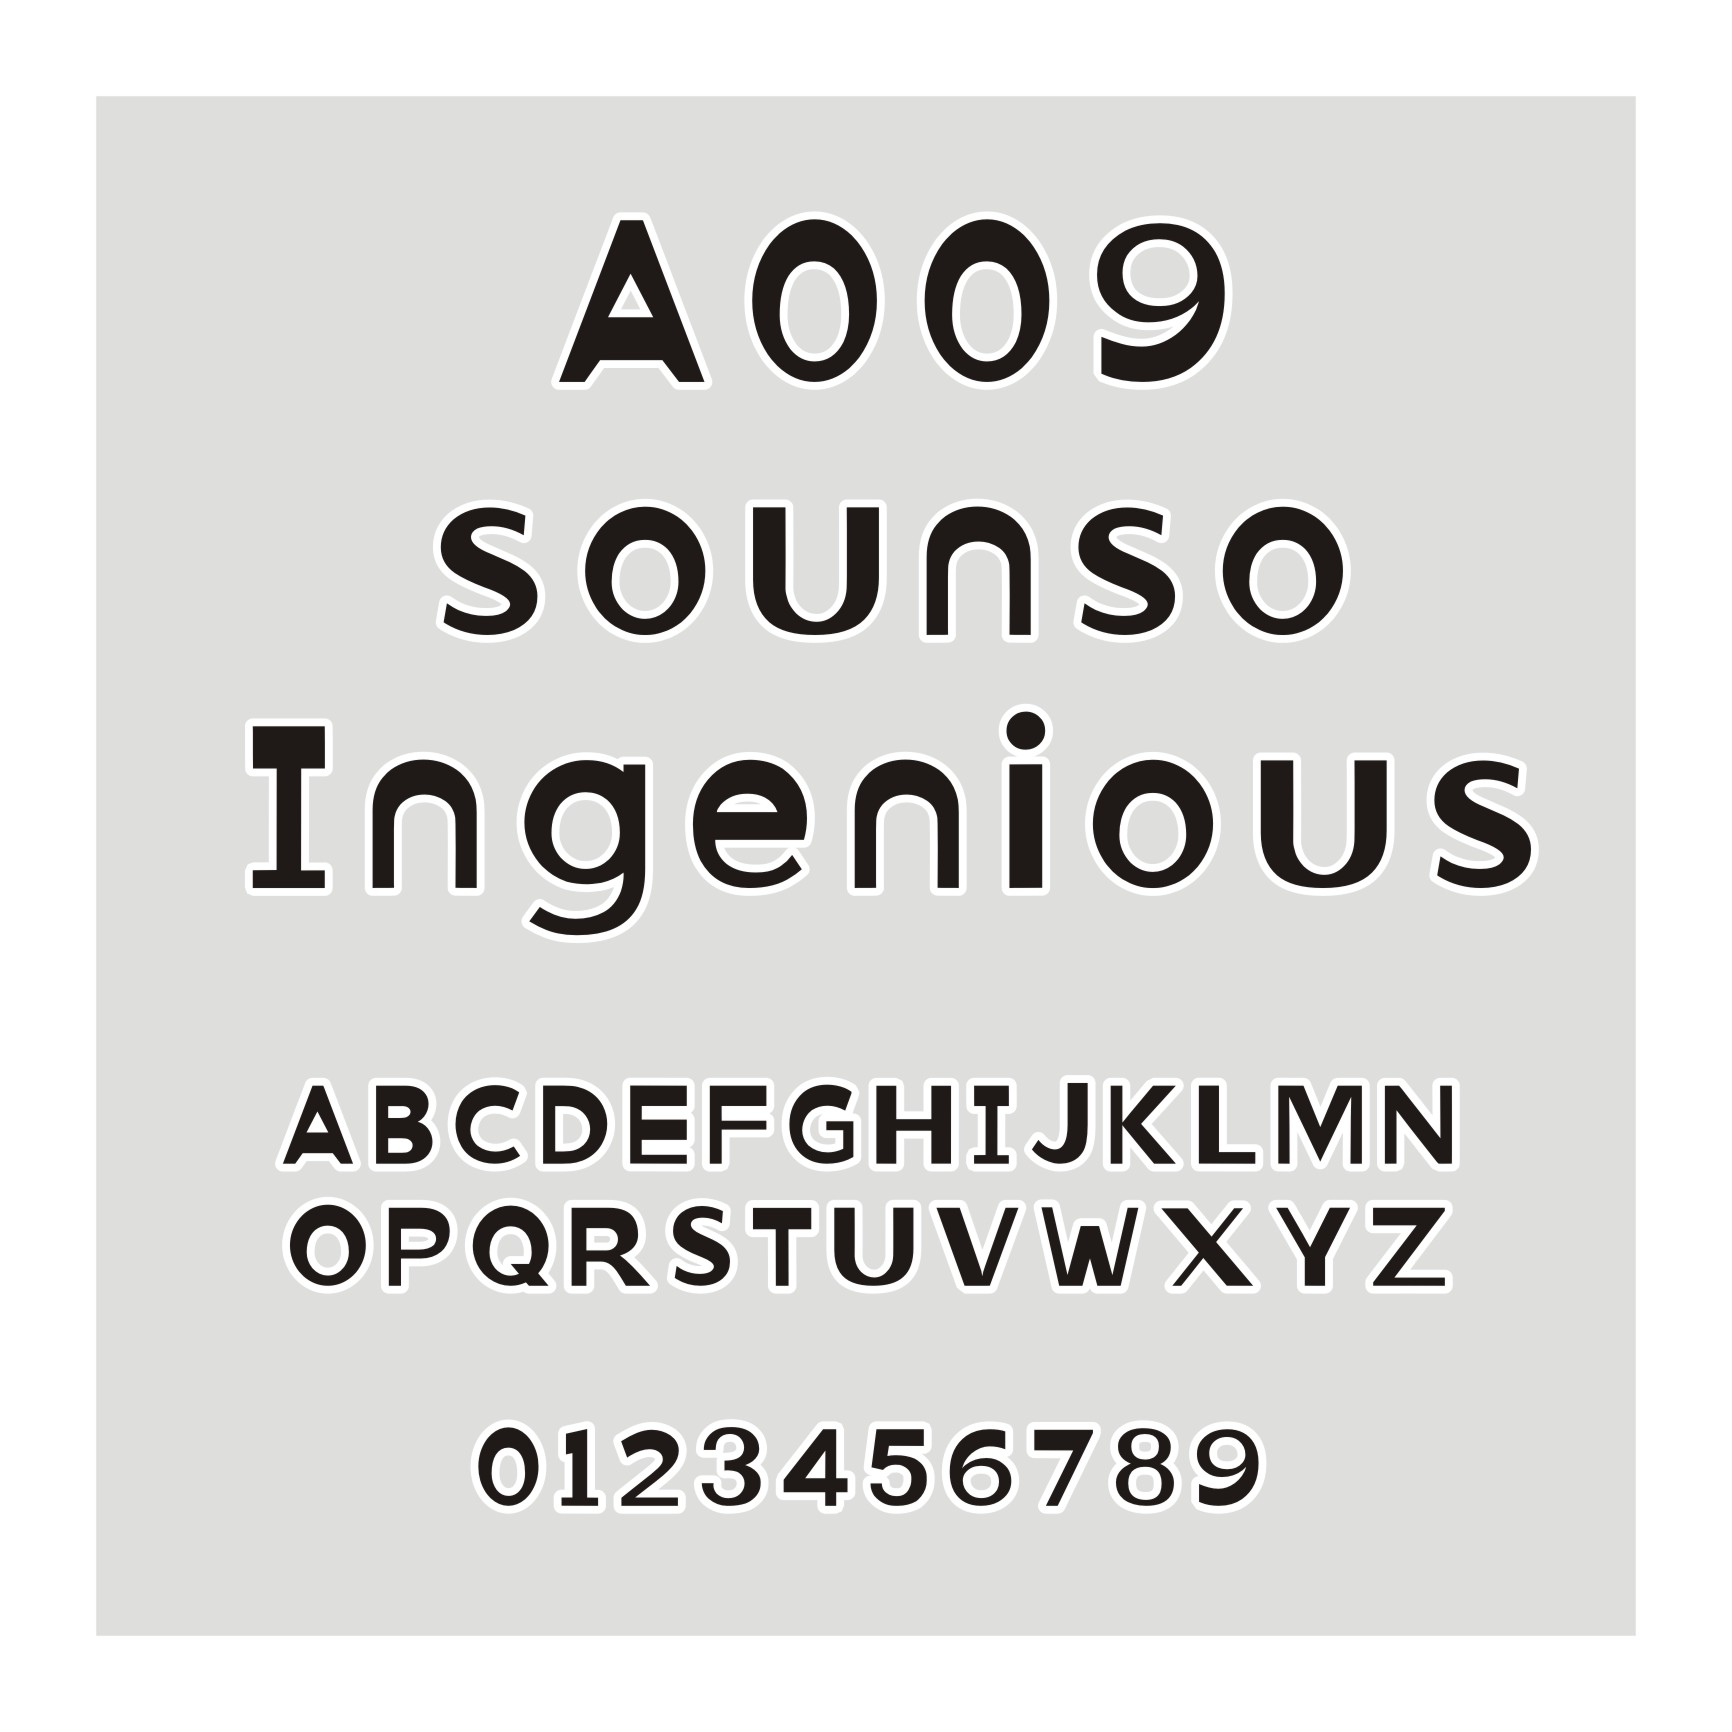 009-sounso Ingenious